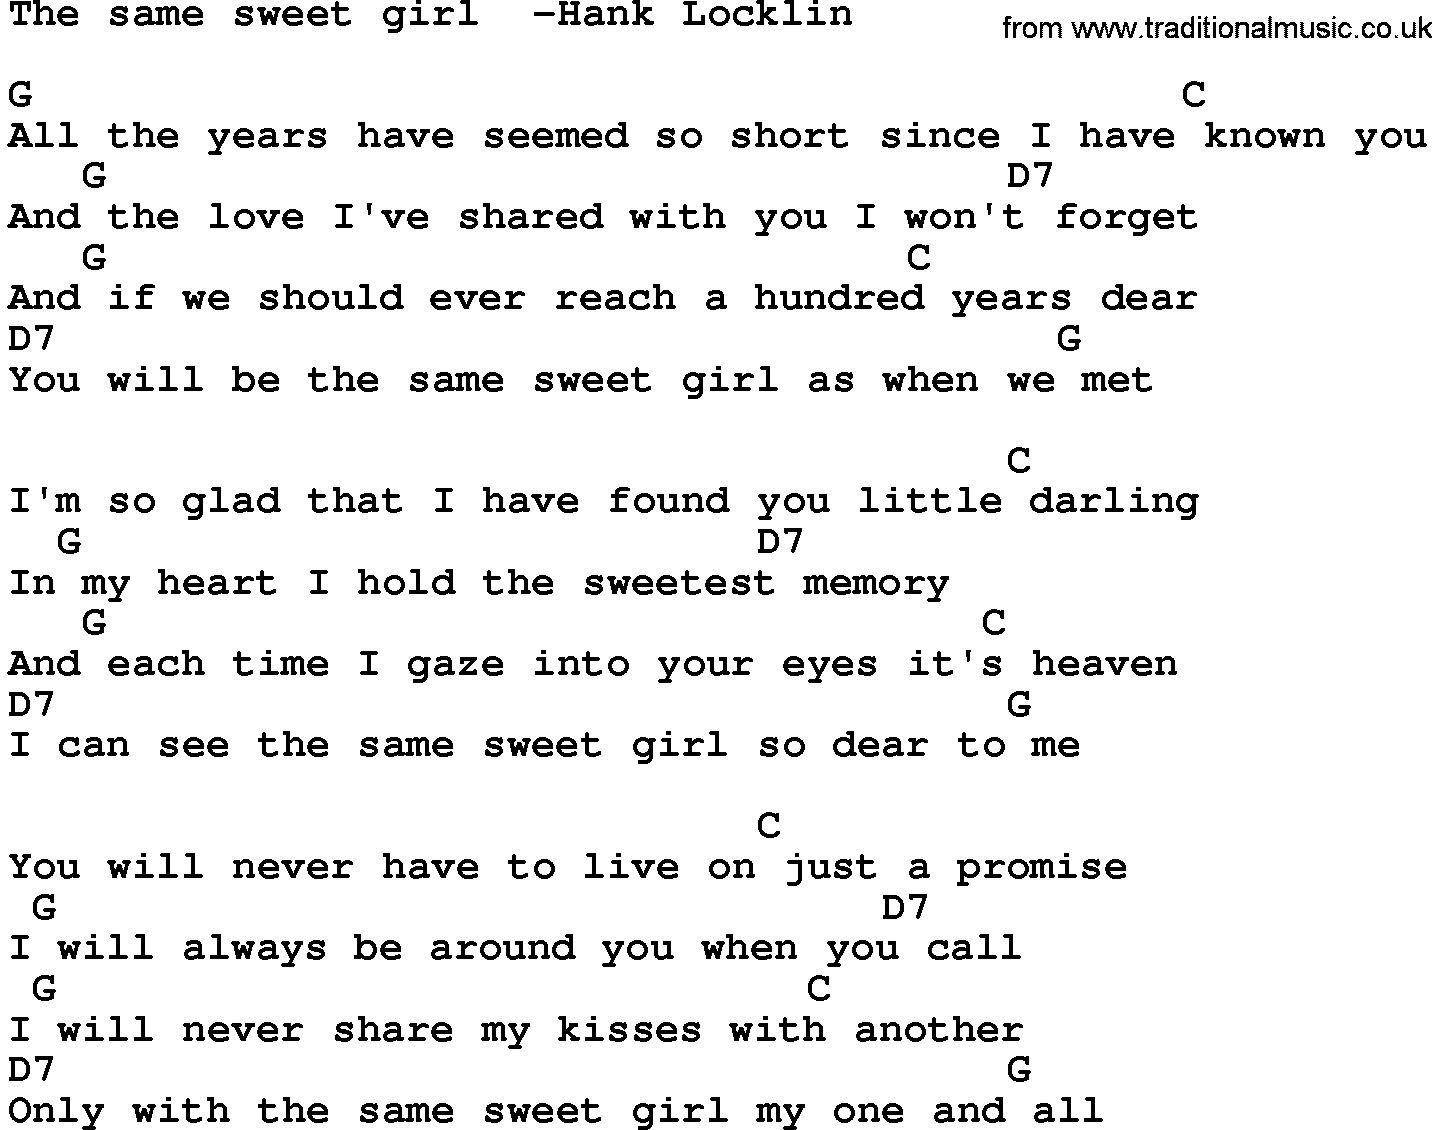 Country music song: The Same Sweet Girl -Hank Locklin lyrics and chords